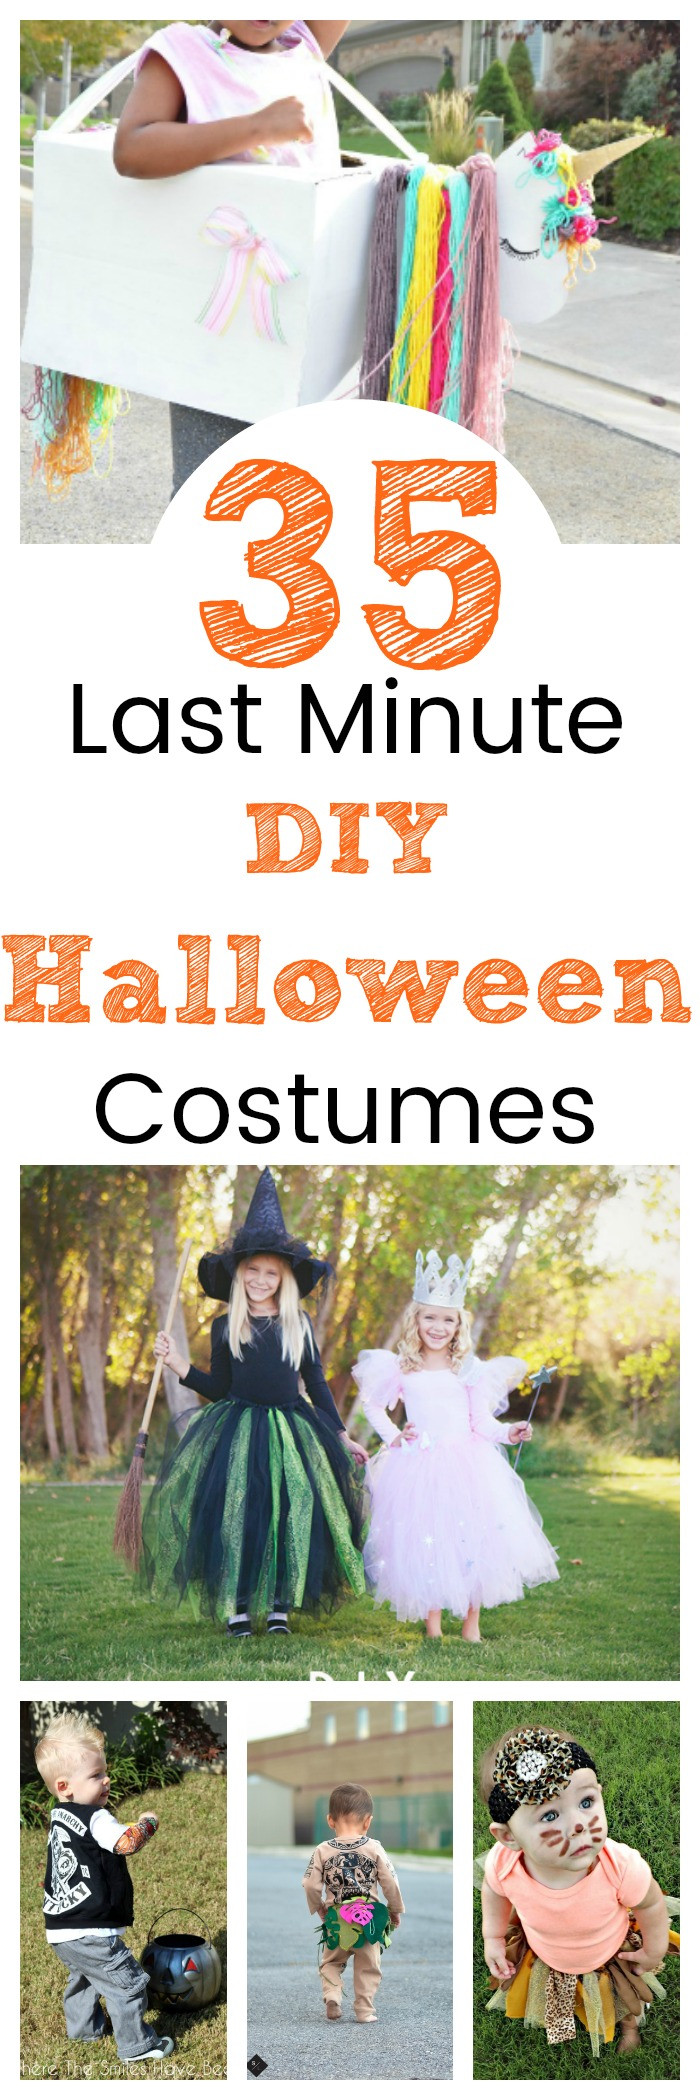 Best ideas about DIY Last Minute Halloween Costumes
. Save or Pin 35 Last Minute DIY Halloween Costumes Now.